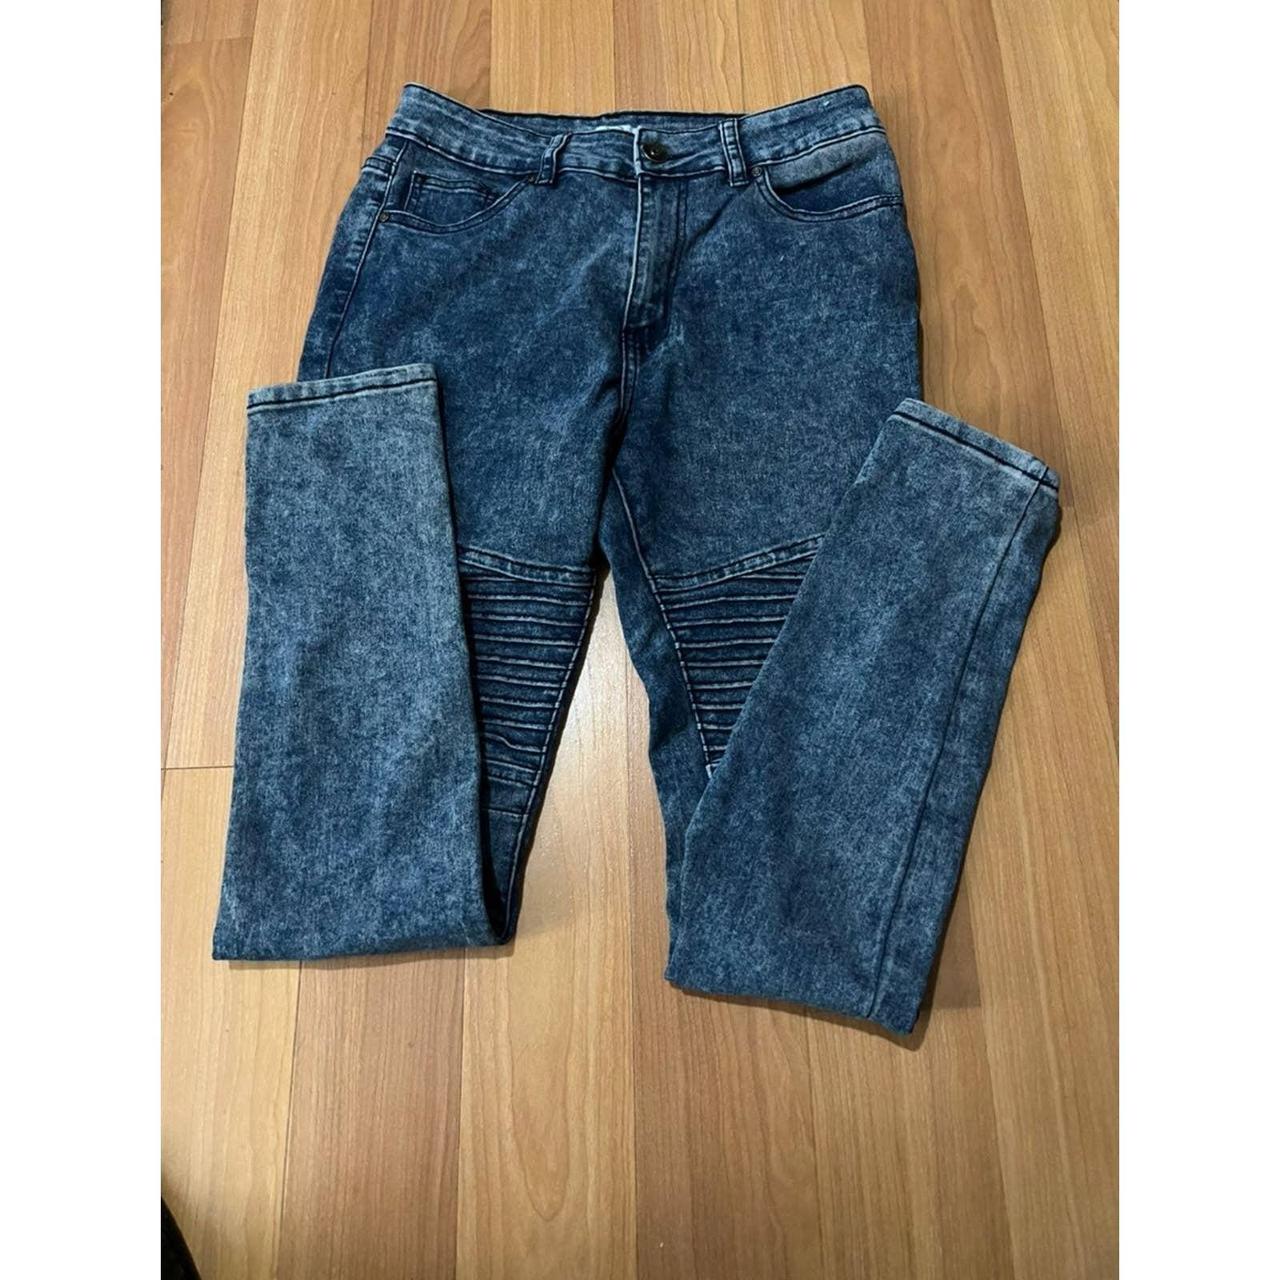 Product Image 1 - AQ Denim Women Jeans Size